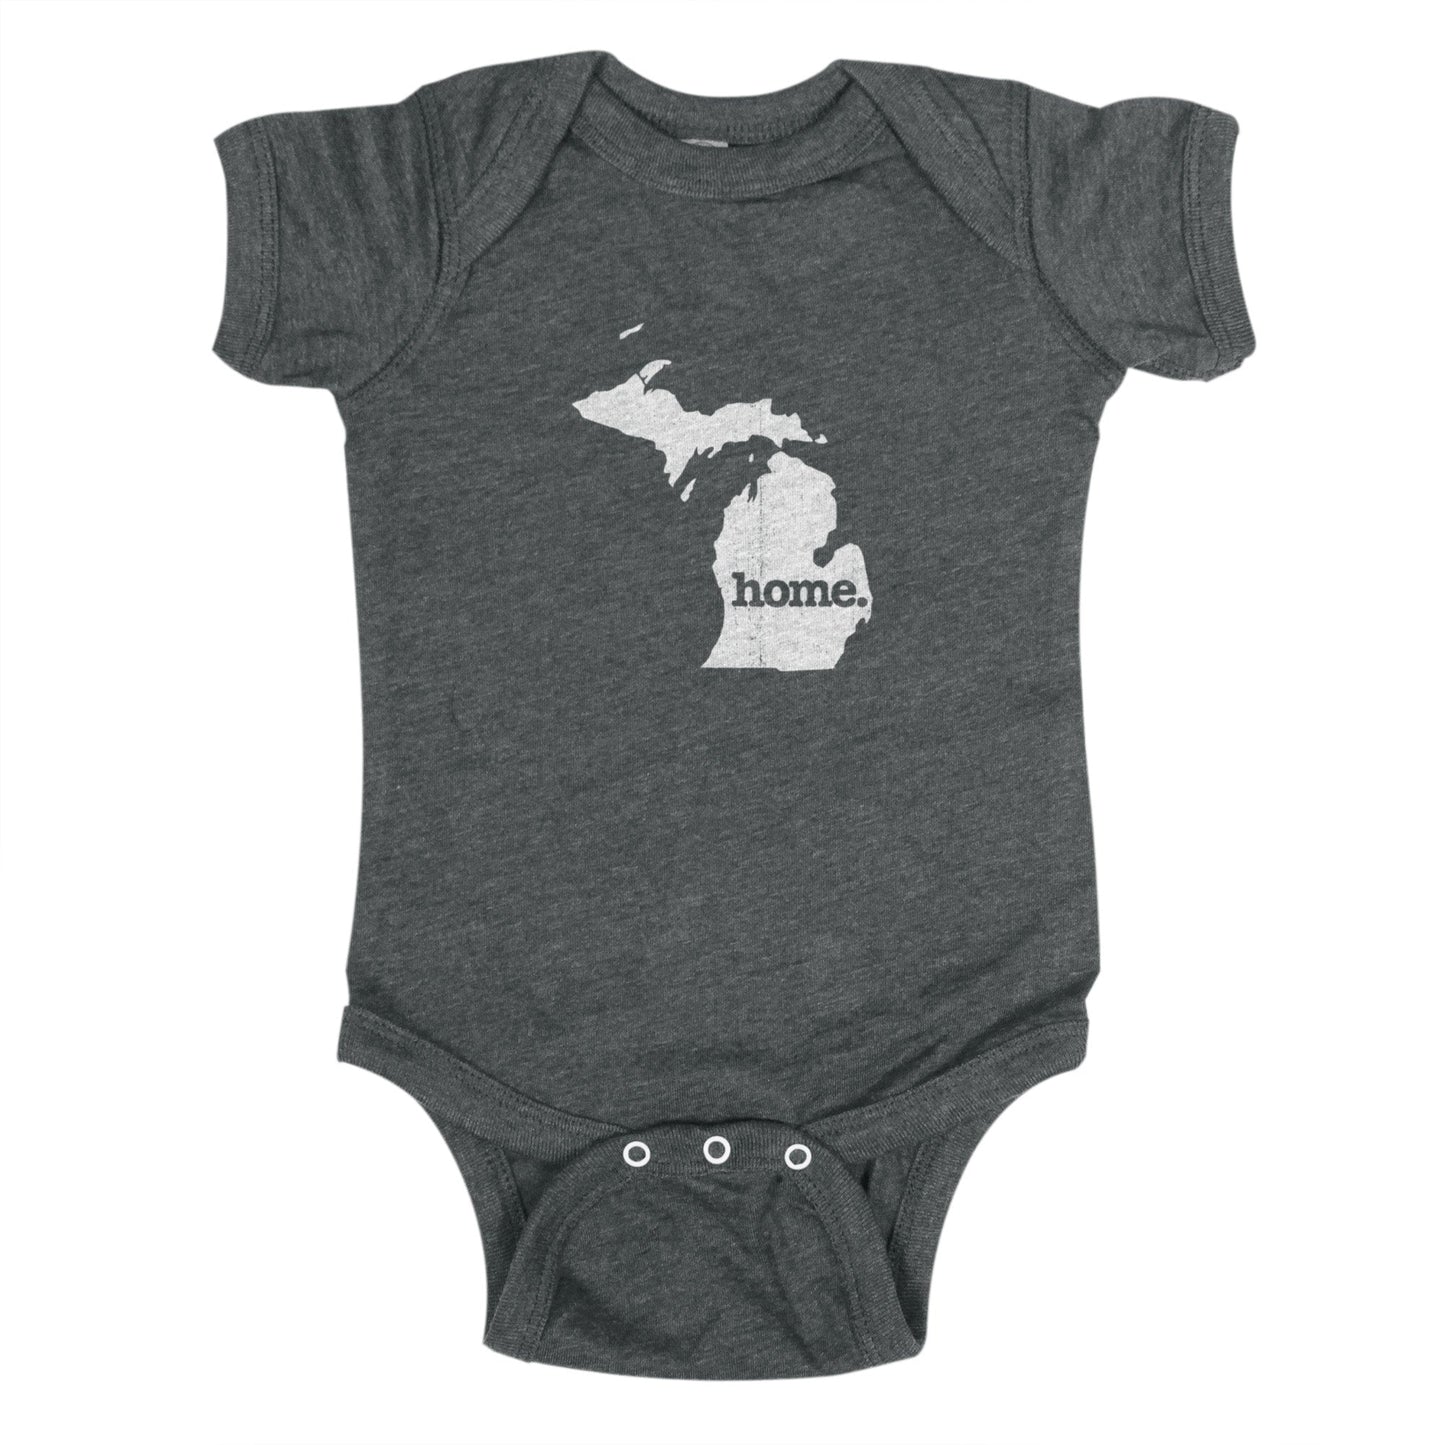 home. Baby Bodysuit - Michigan